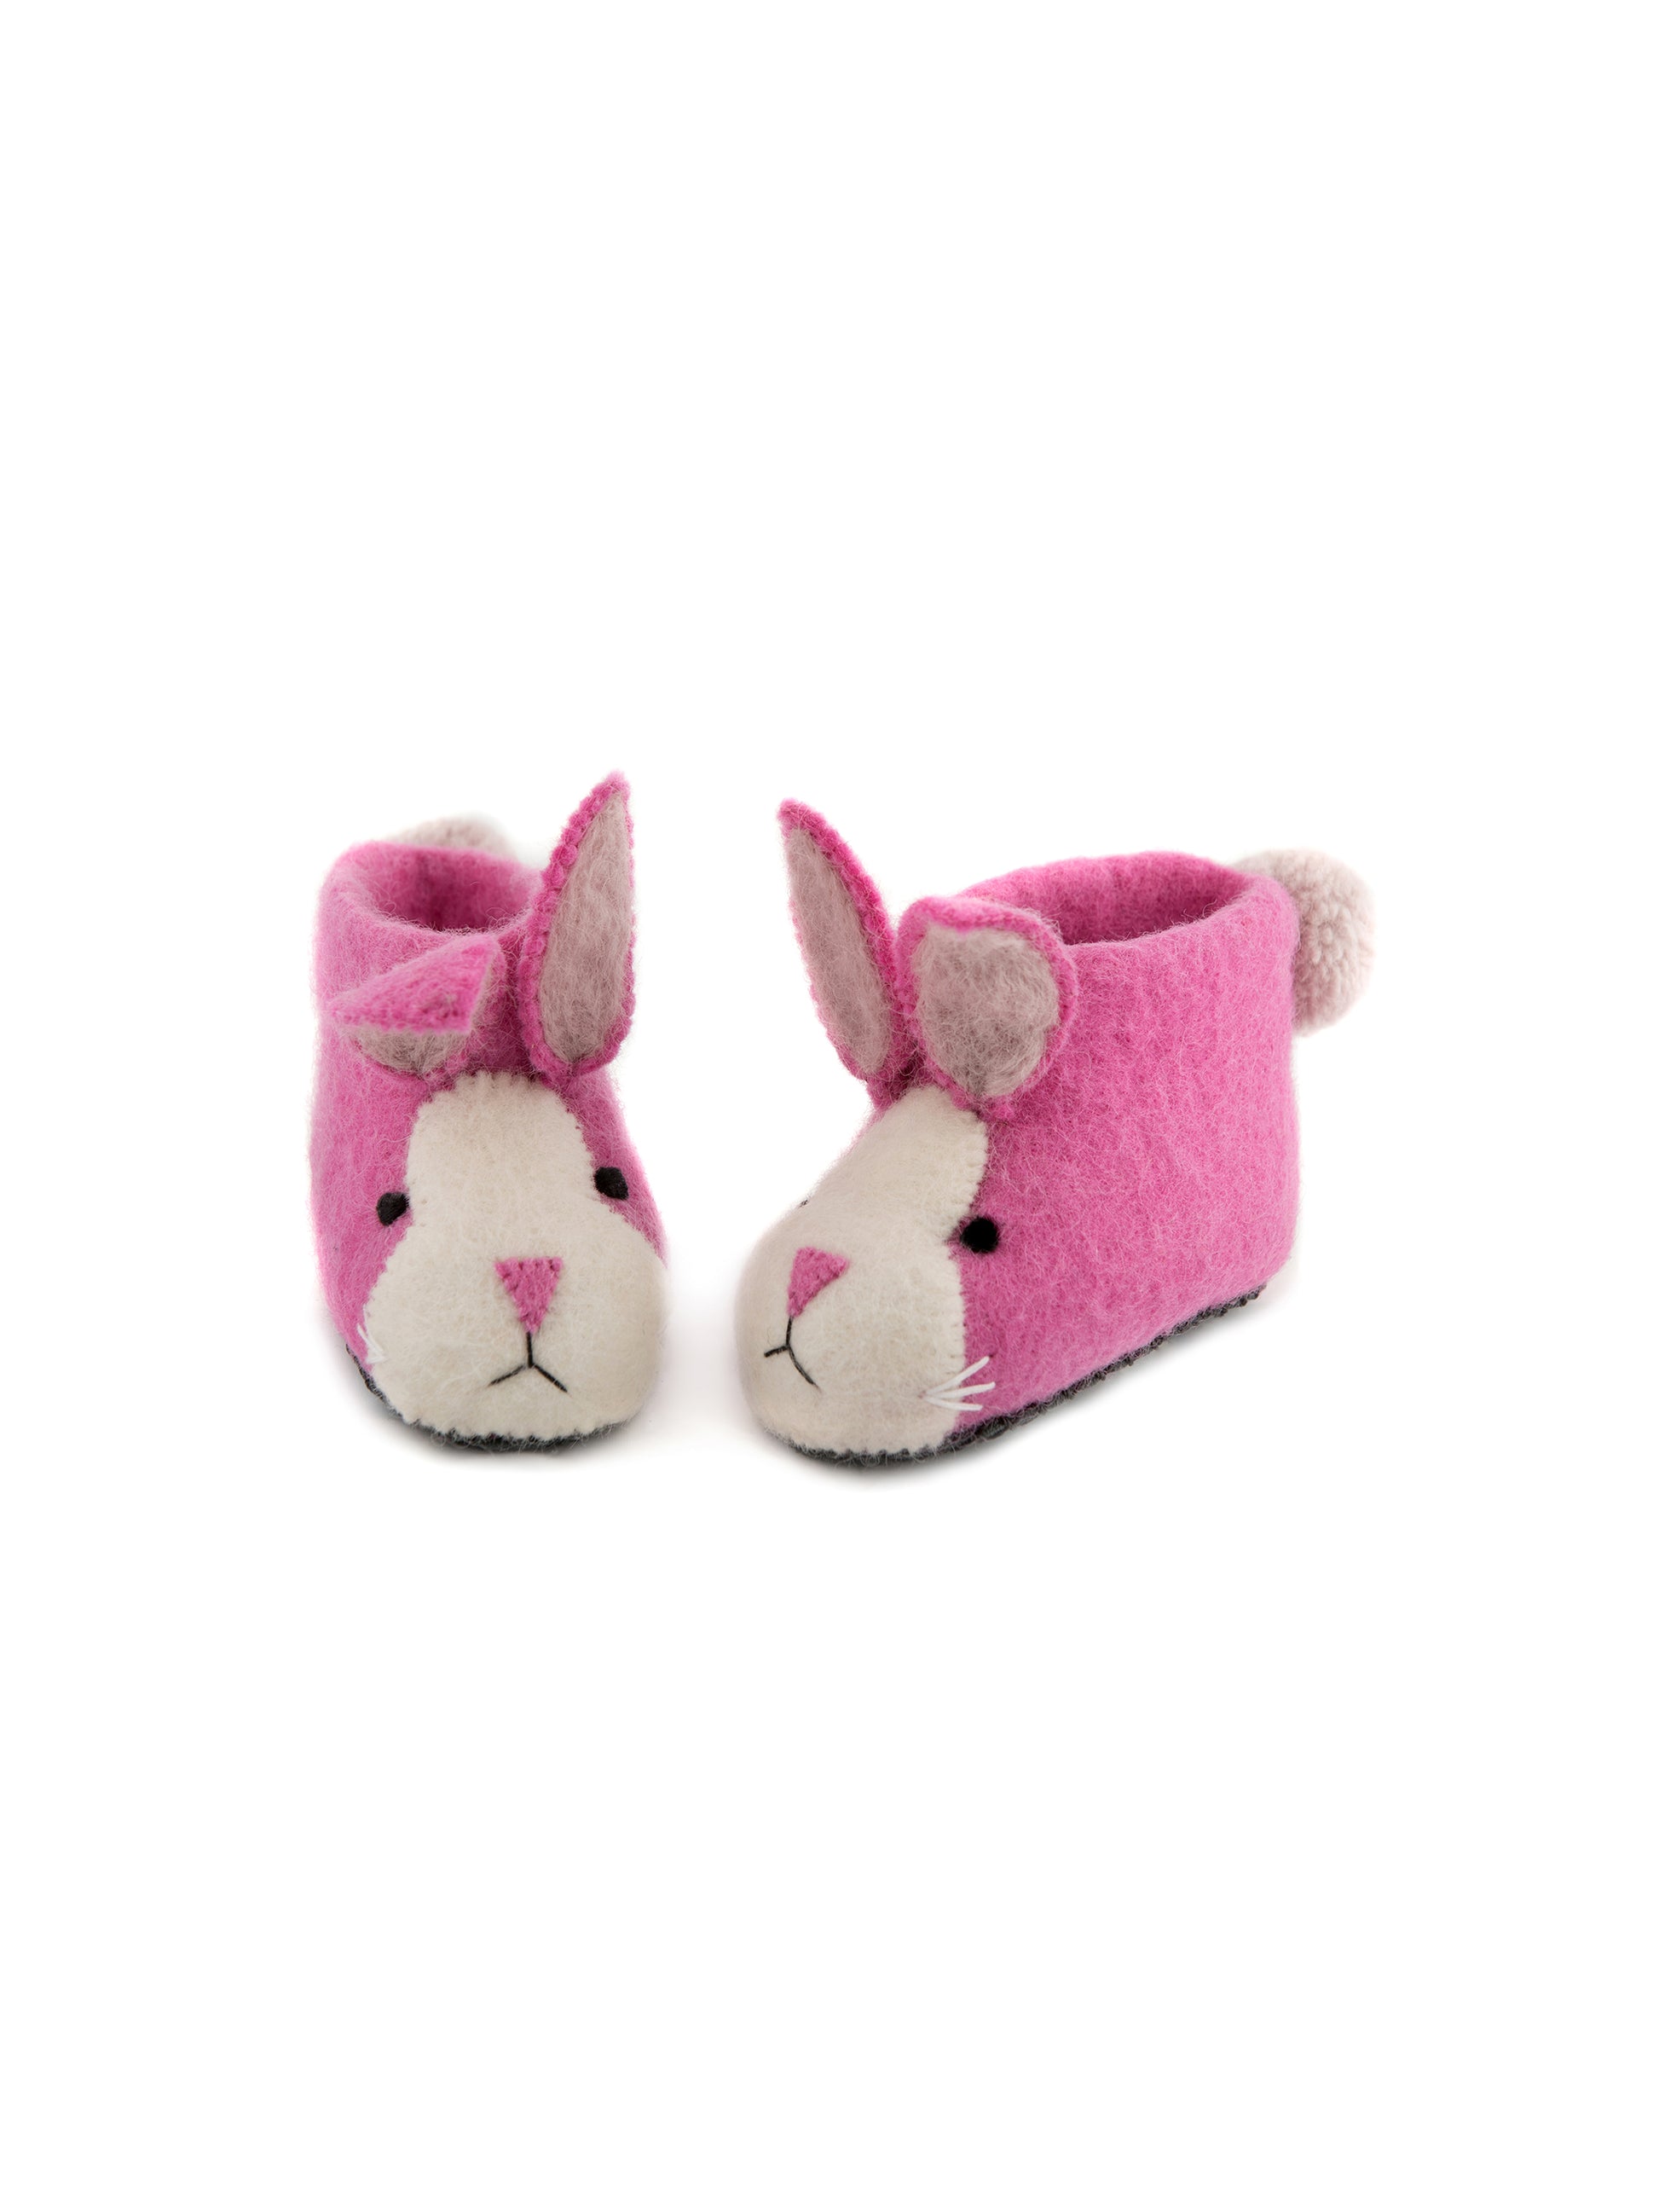 Classic Bunny Slippers™, Fuzzy Bunny Slippers